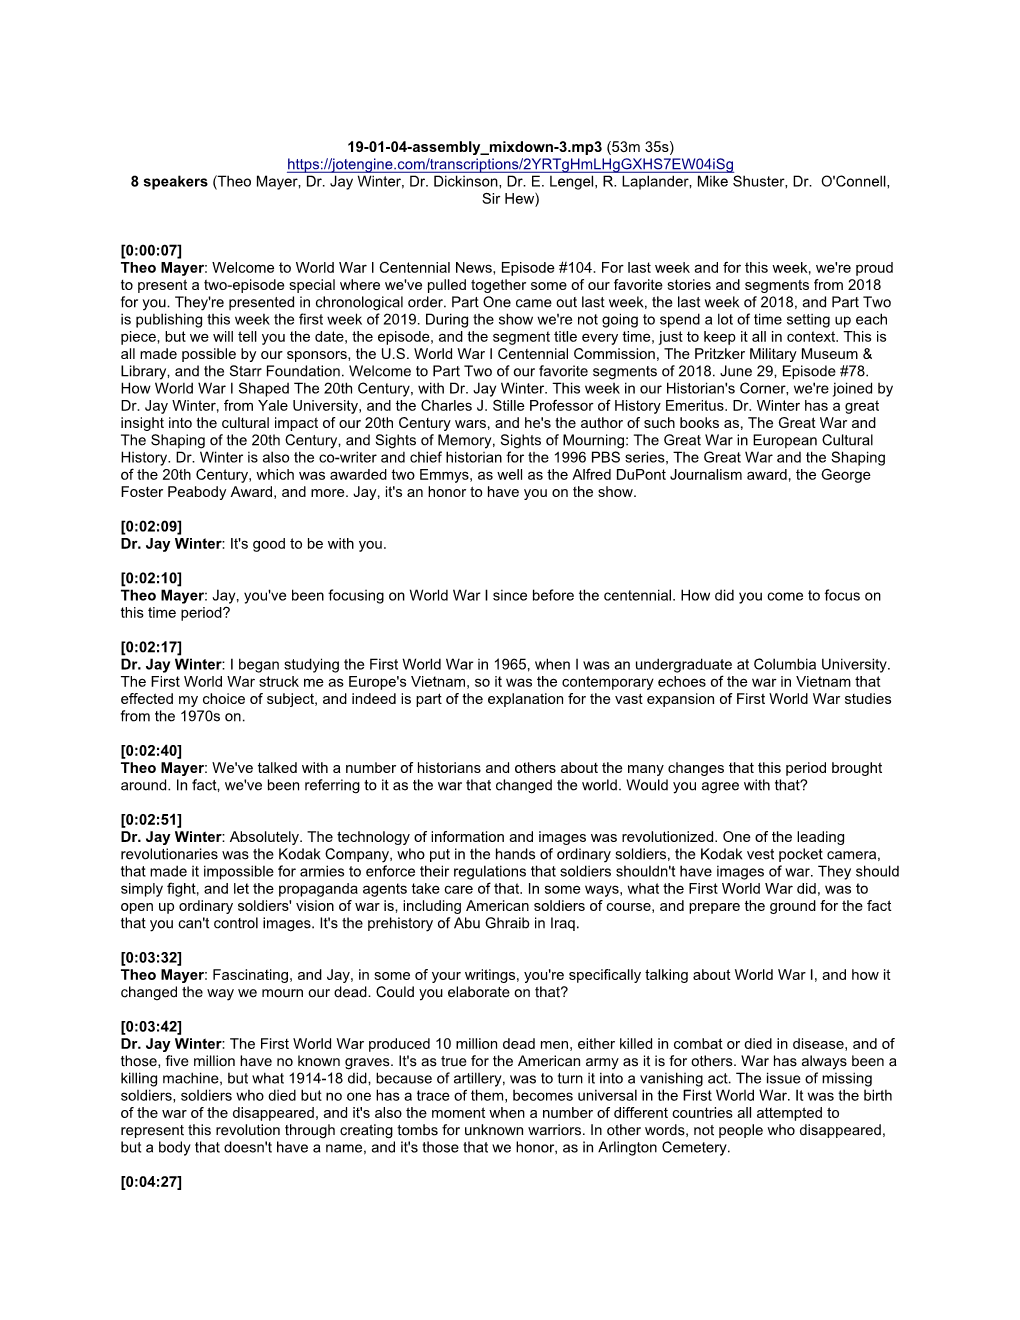 View PDF of Transcript